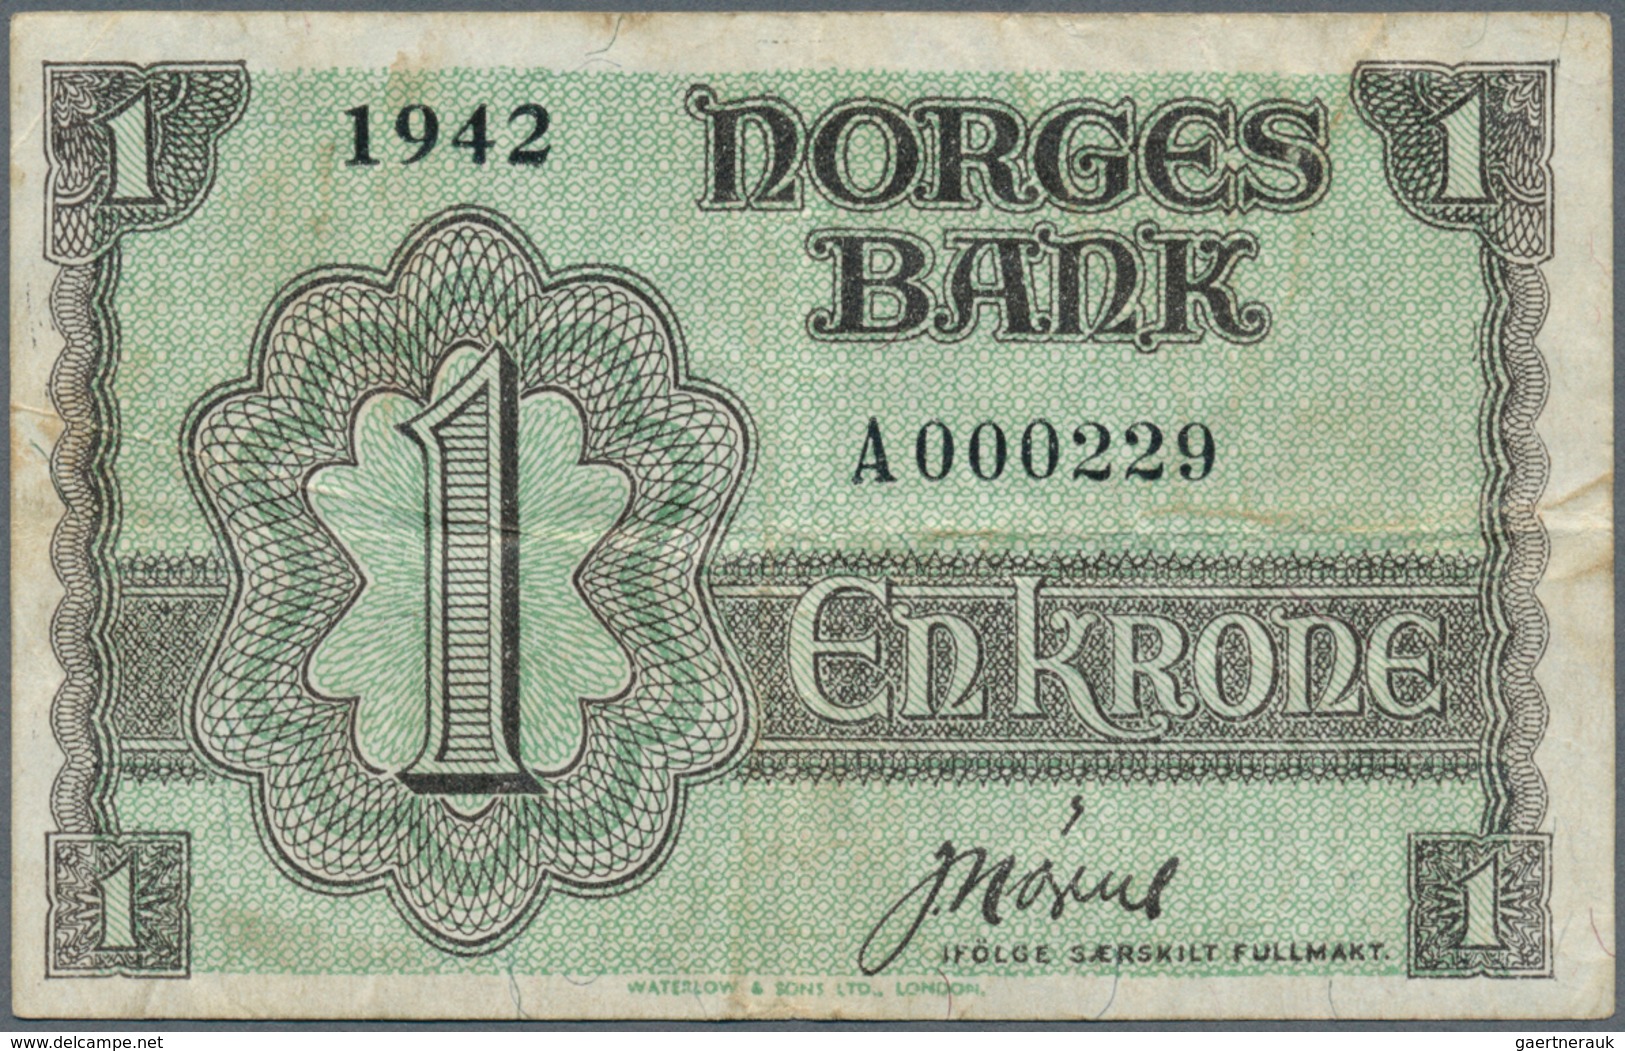 Norway / Norwegen: 1 Krone 1942 P. 17a With Very Low Serial Number #A000229, So This Note Was The 22 - Noorwegen